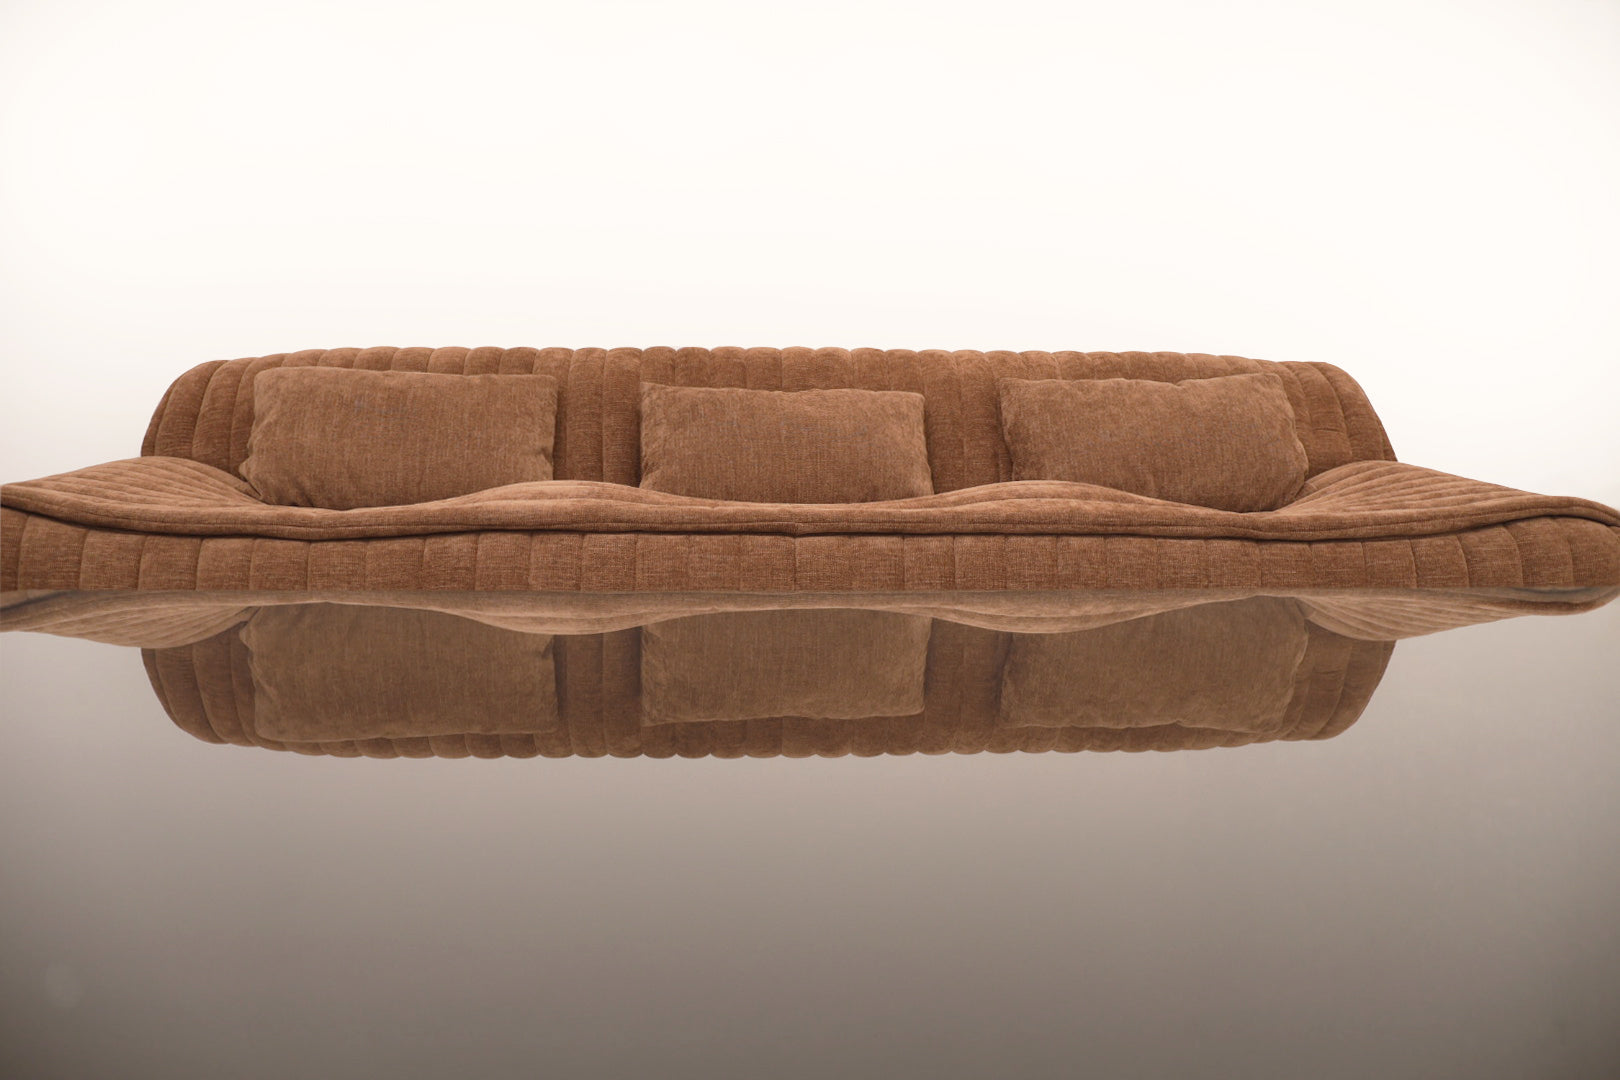 The Seena Sofa